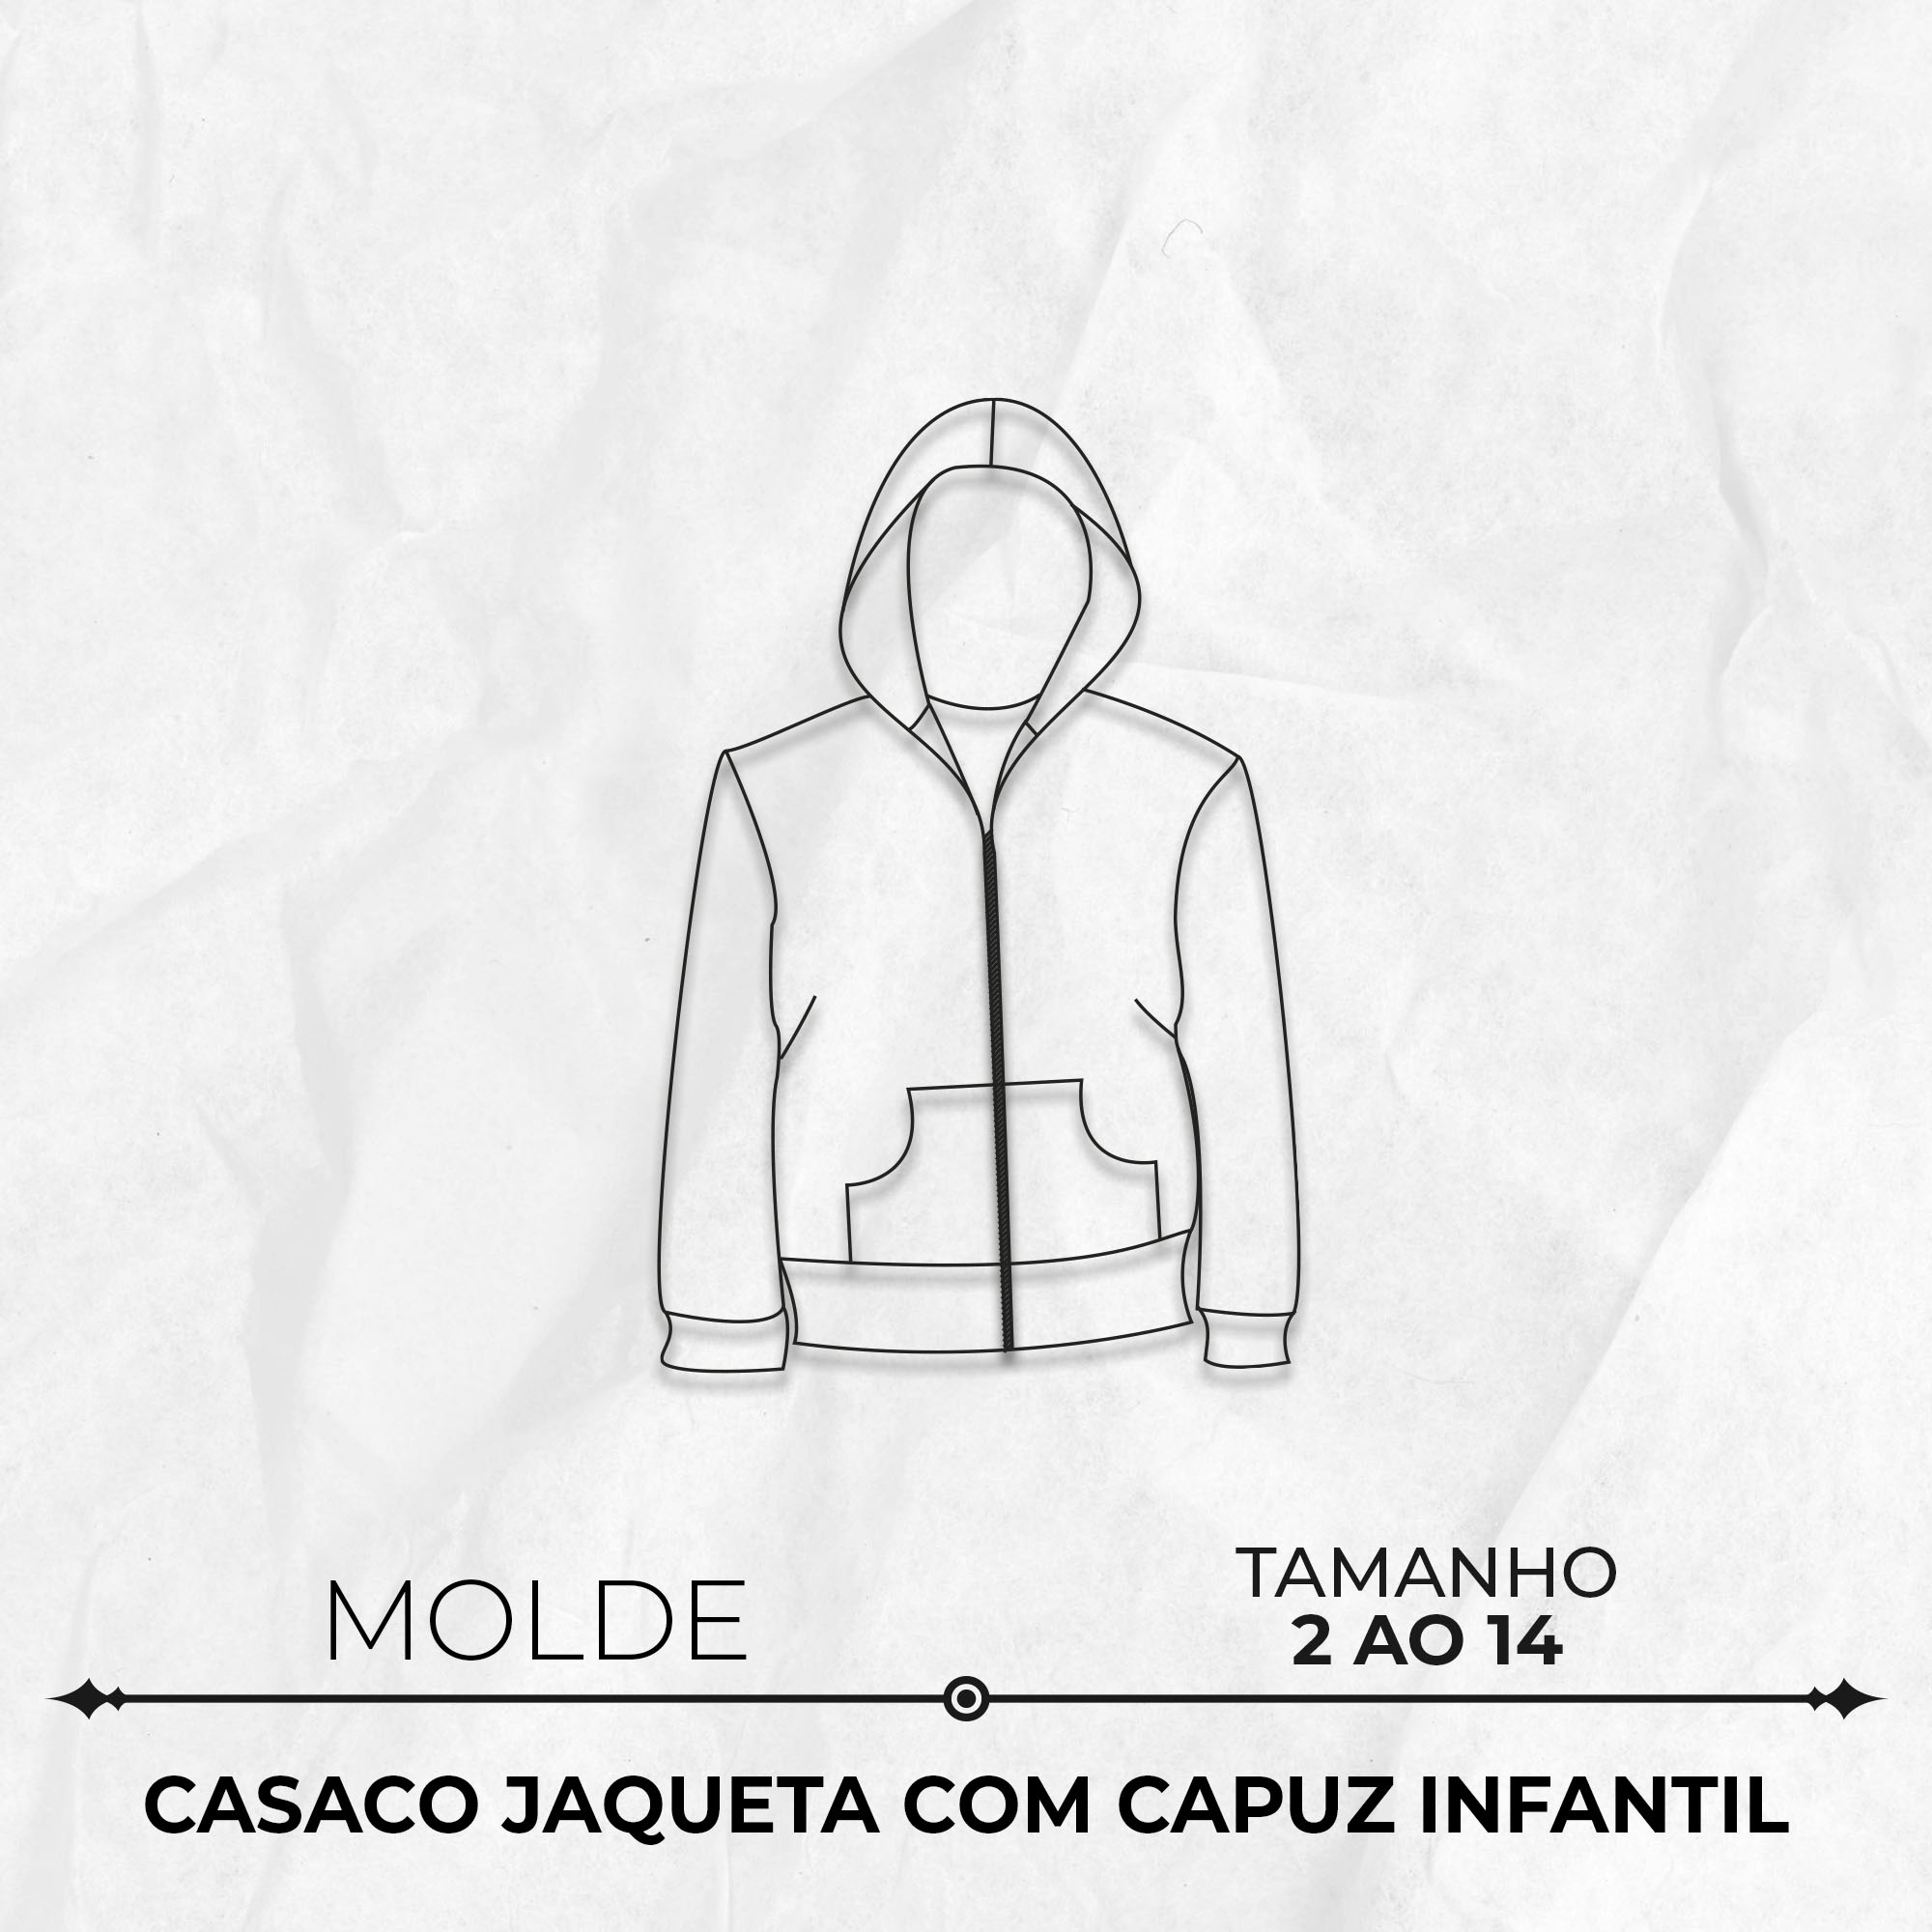 Molde jaqueta infantil tamanho 2 ao 14 by Marlene Mukai